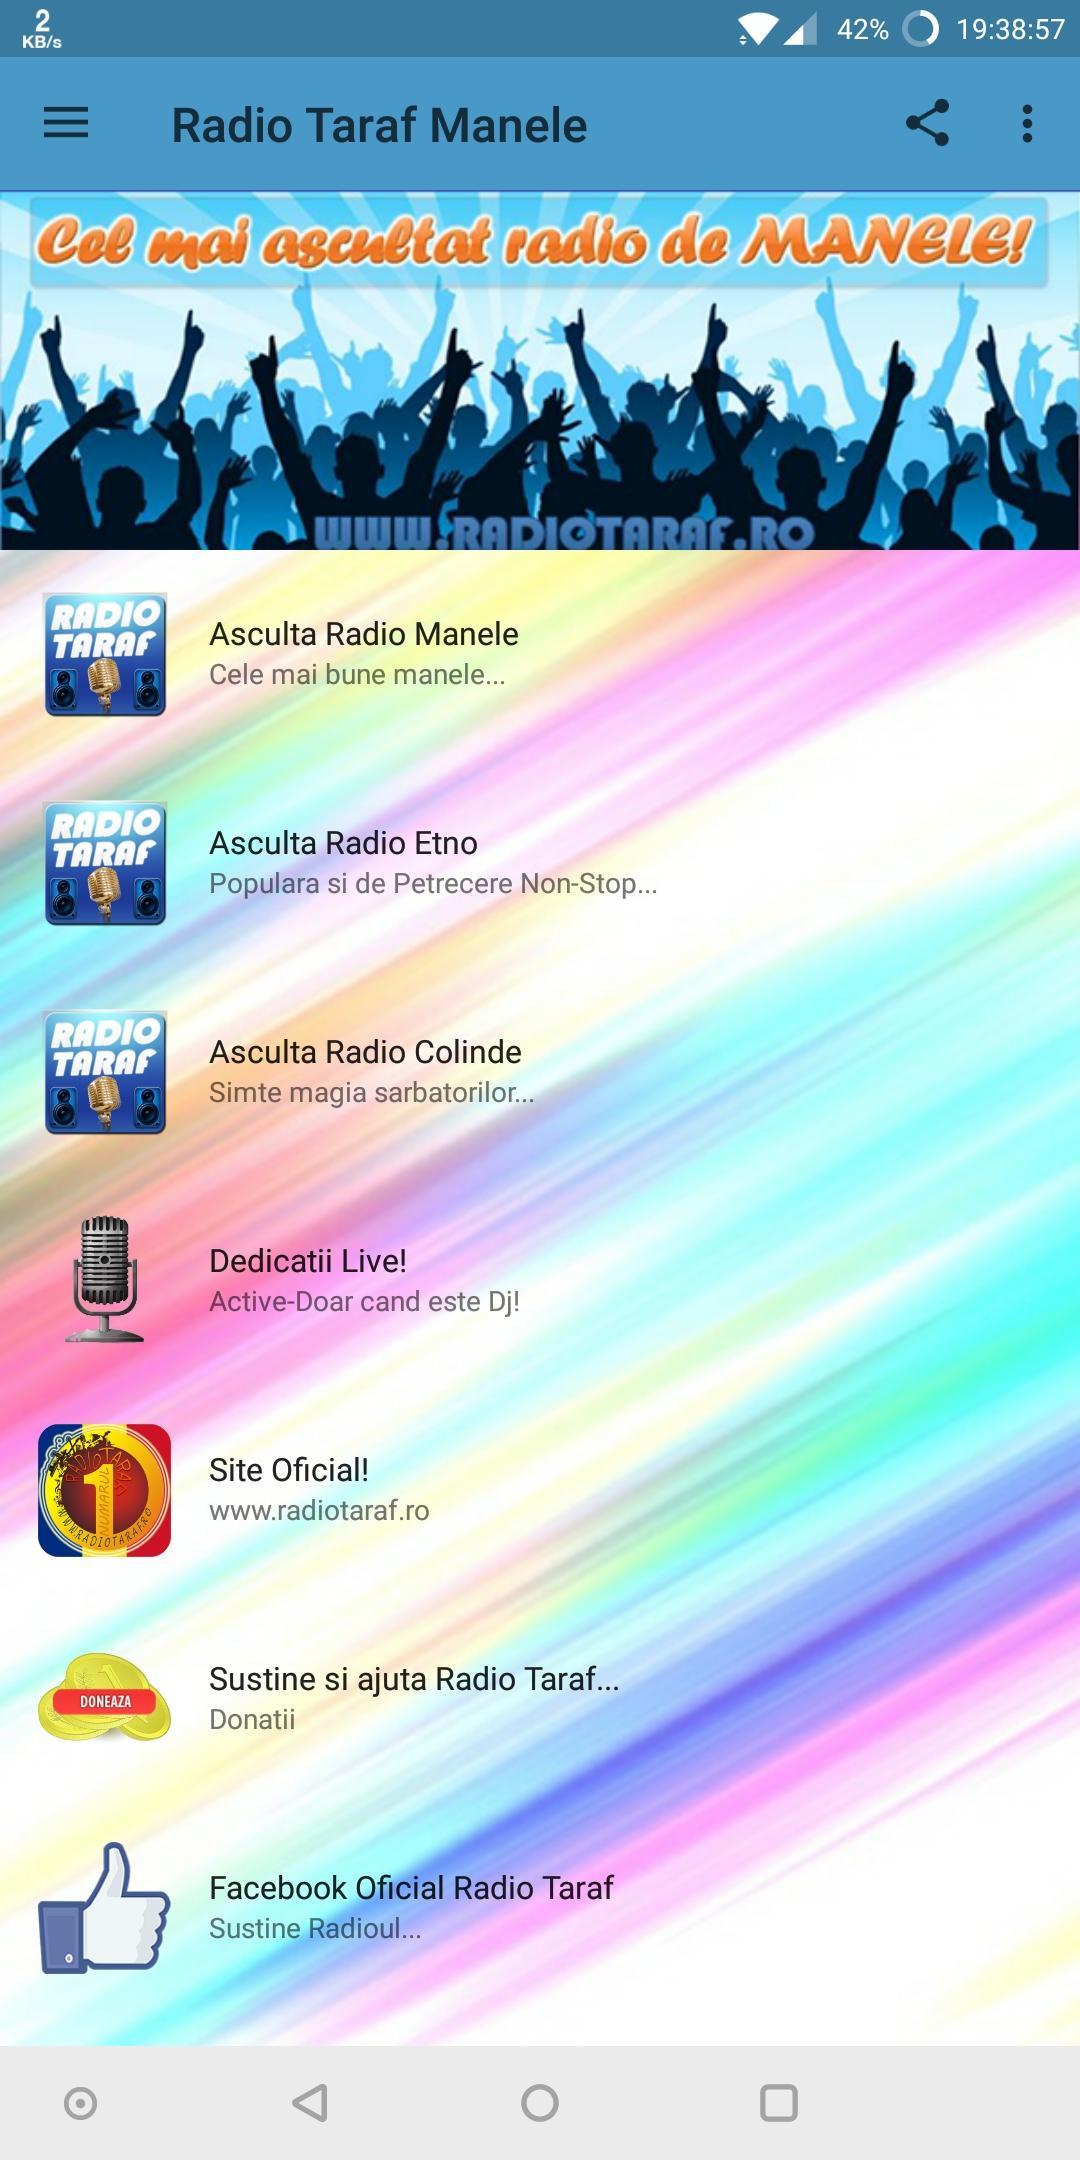 Radio Taraf Manele for Android - APK Download